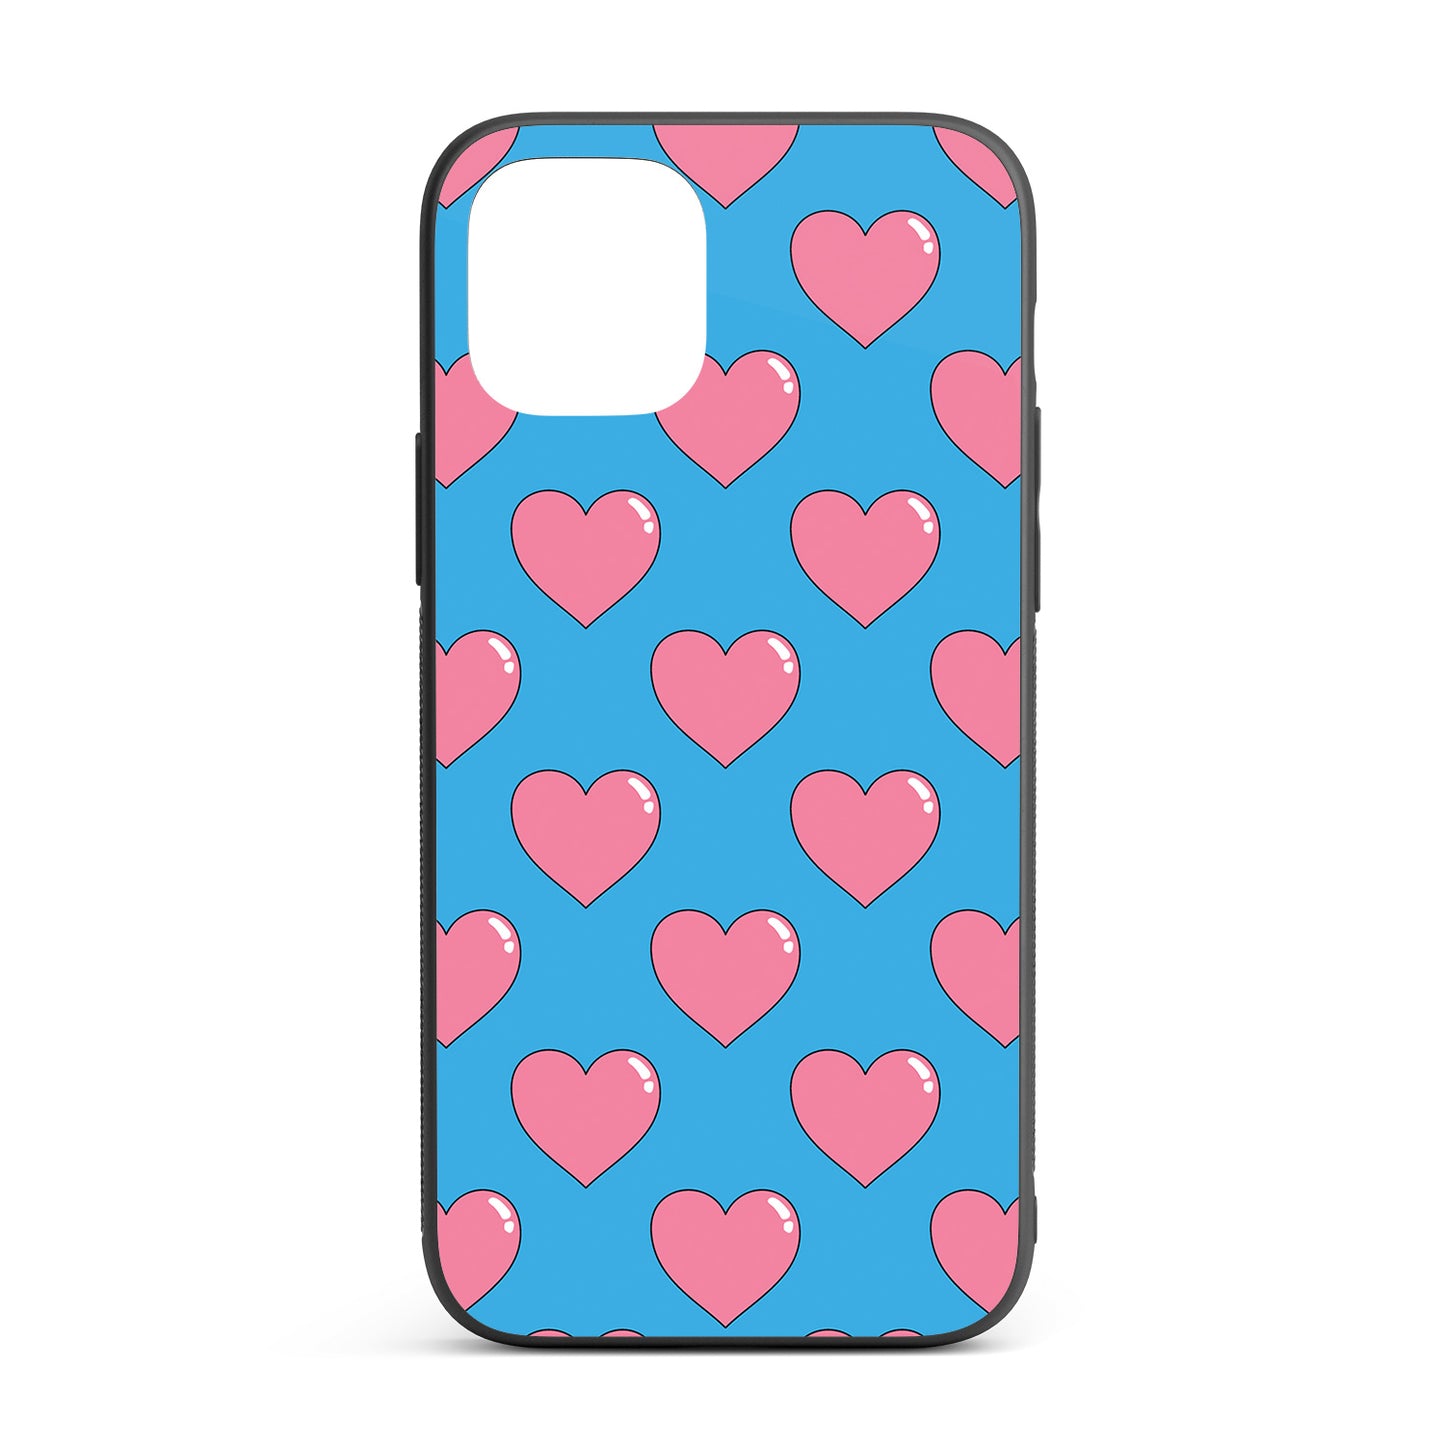 Bubblegum Heart iPhone glass case